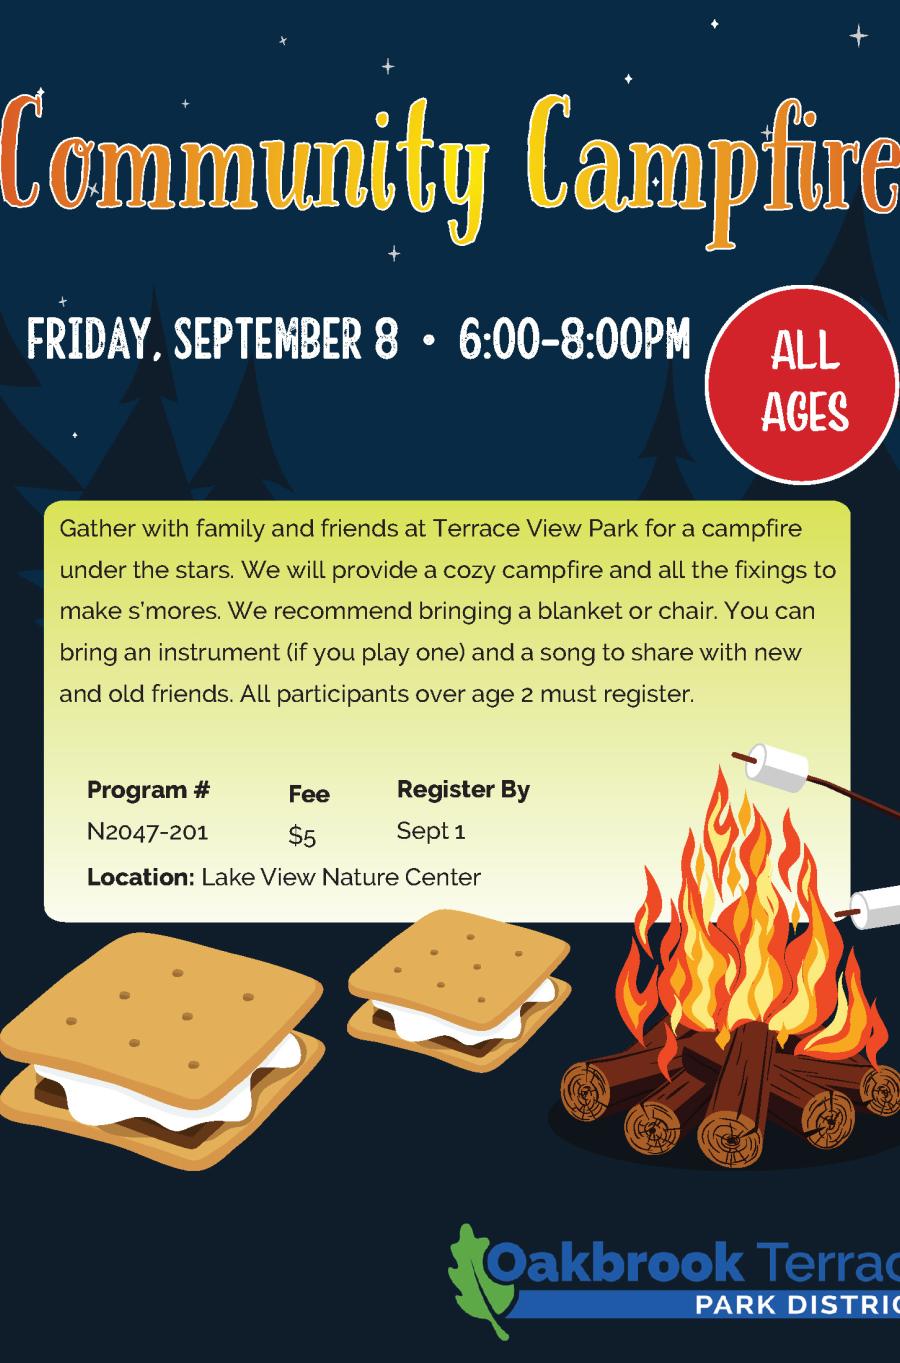 Community Campfire flyer